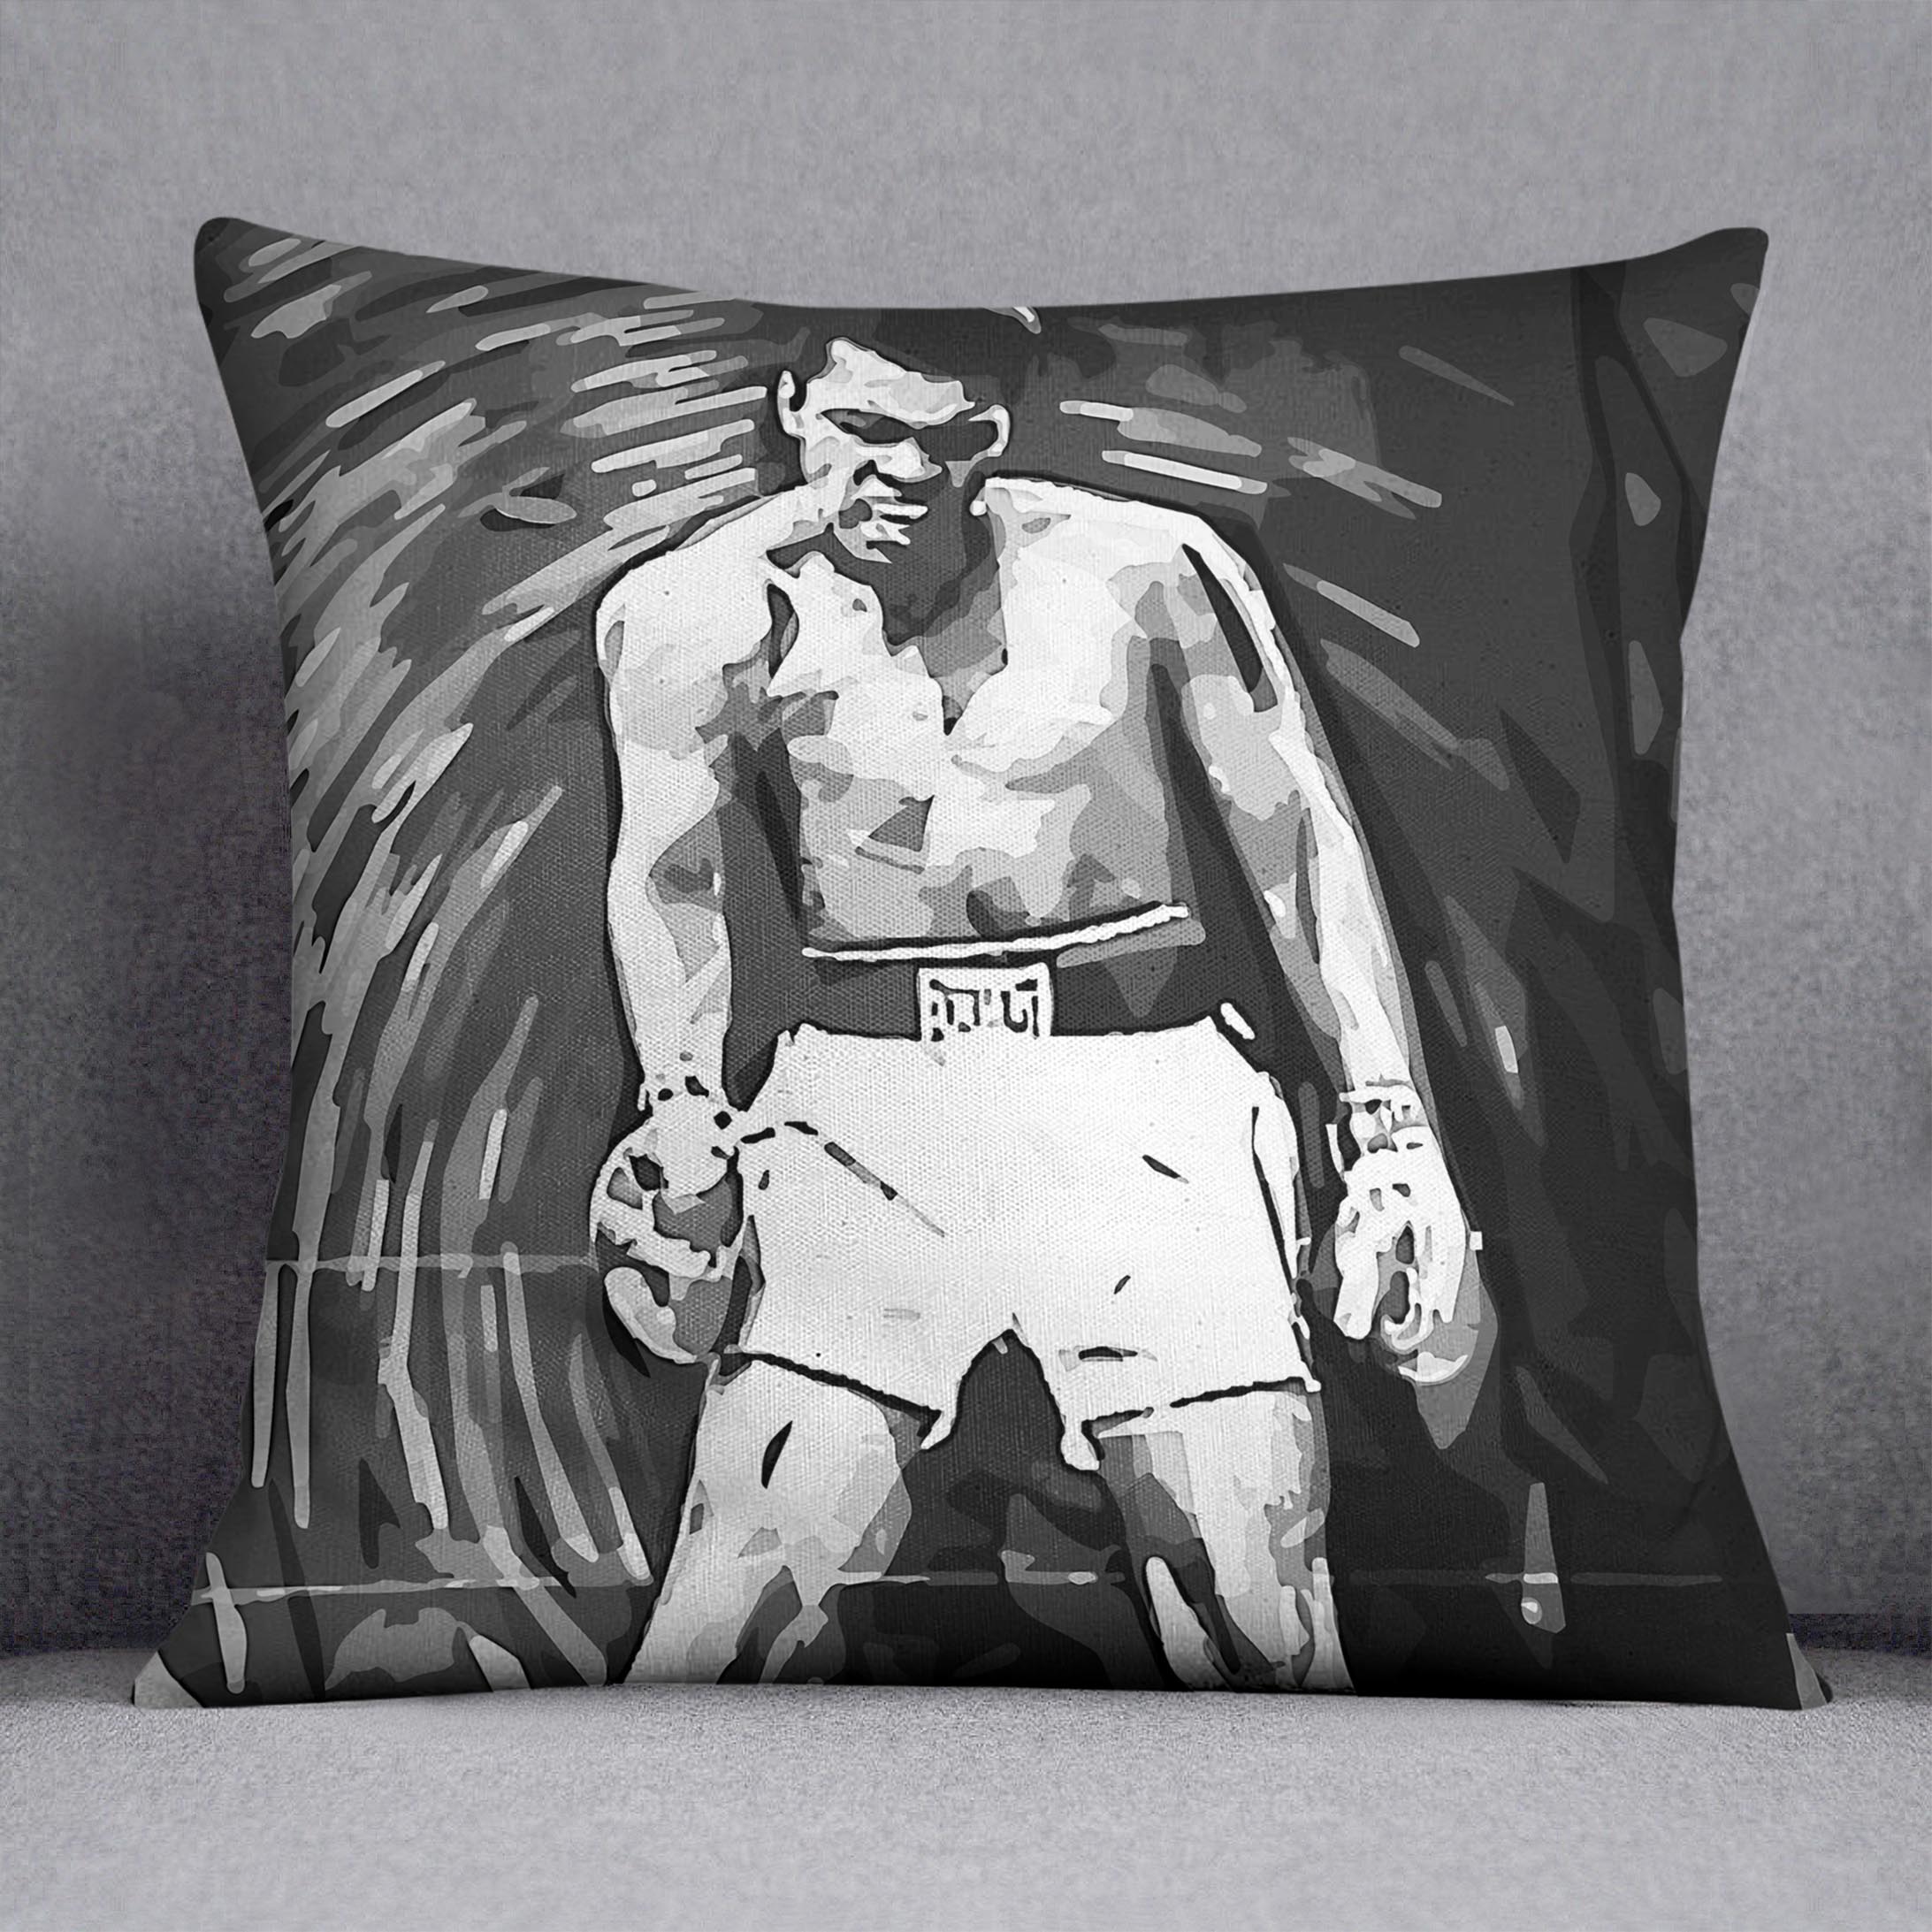 Muhammad Ali Pop Art Cushion